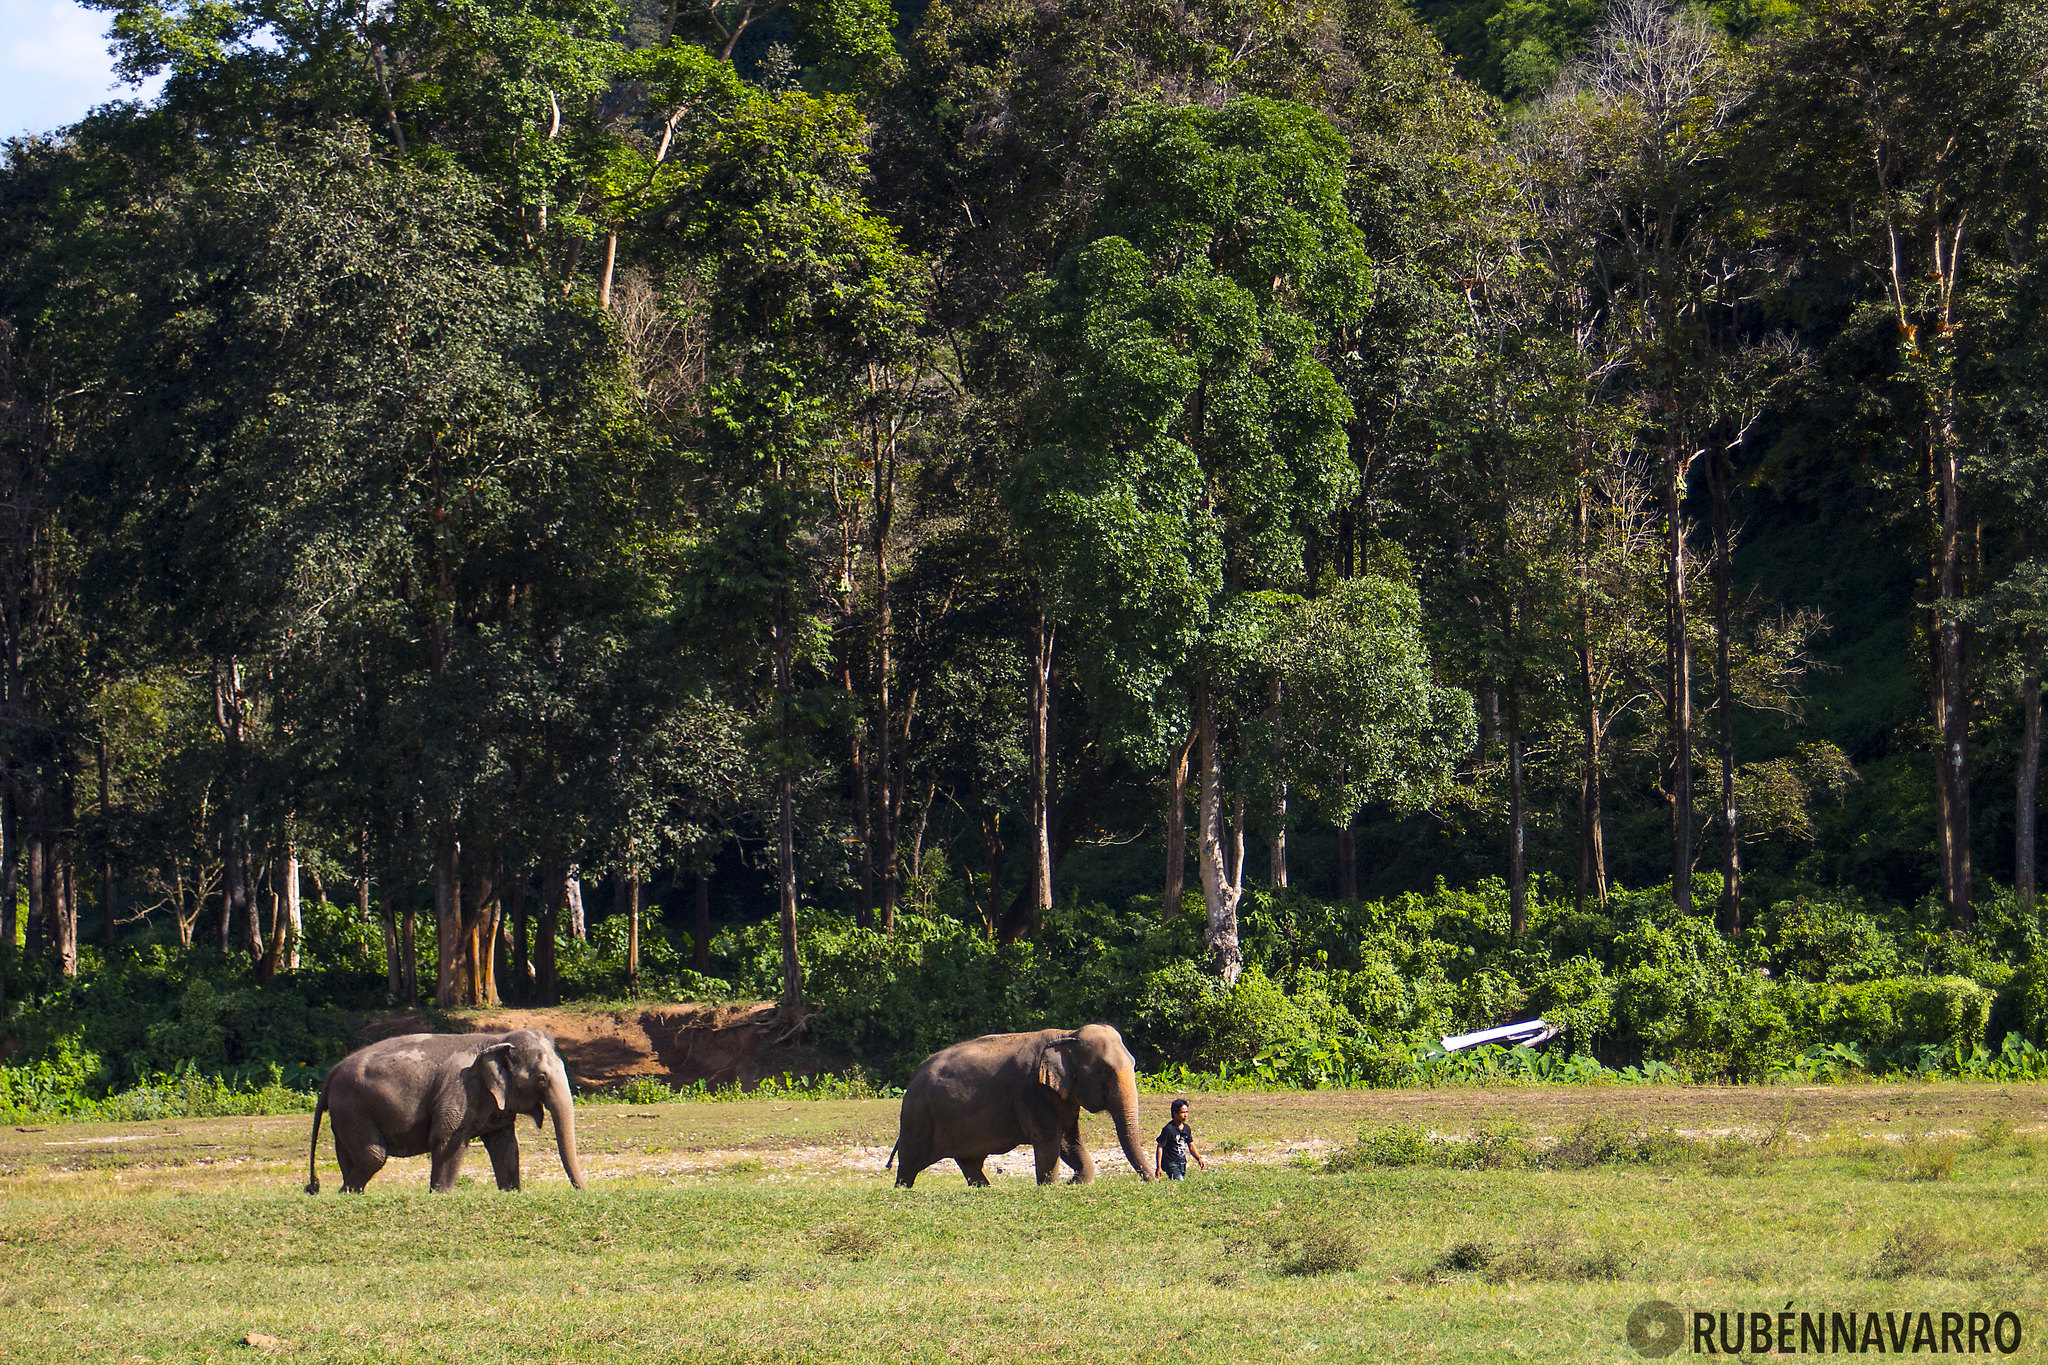 Elephant Nature Park turista responsable